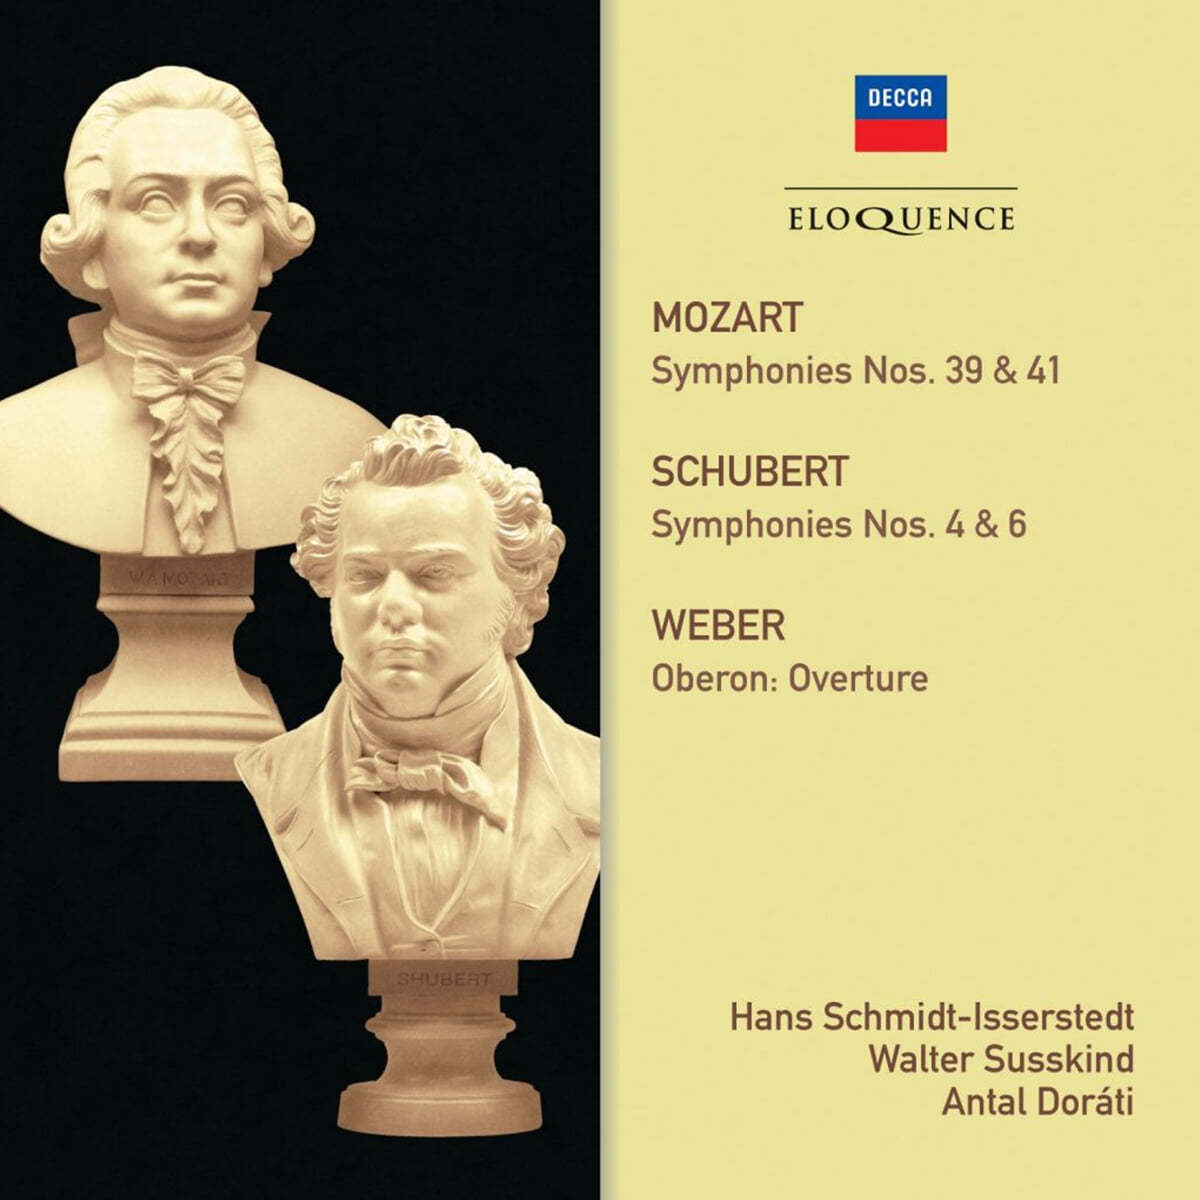 Hans Schmidt-Isserstedt / Walter Susskind / Antal Dorati 모차르트: 교향곡 39번, 41번 &#39;주피터&#39; / 슈베르트: 교향곡 4번, 6번 / 베버: &#39;오베론&#39; 서곡 (Mozart / Schubert / Weber)